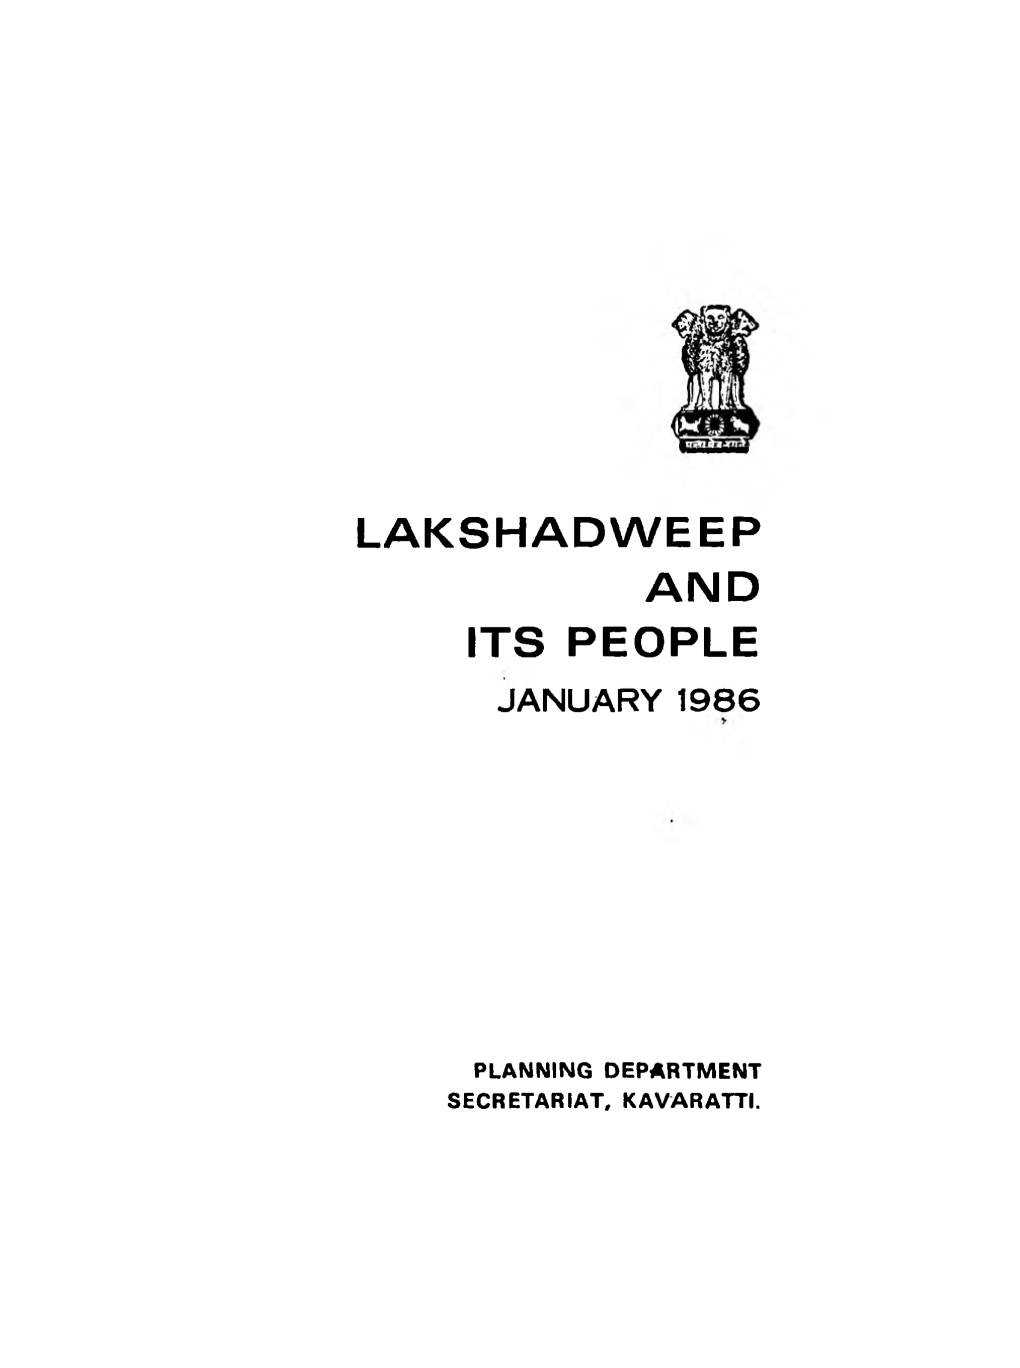 Lakshadweep and Its People January 1986